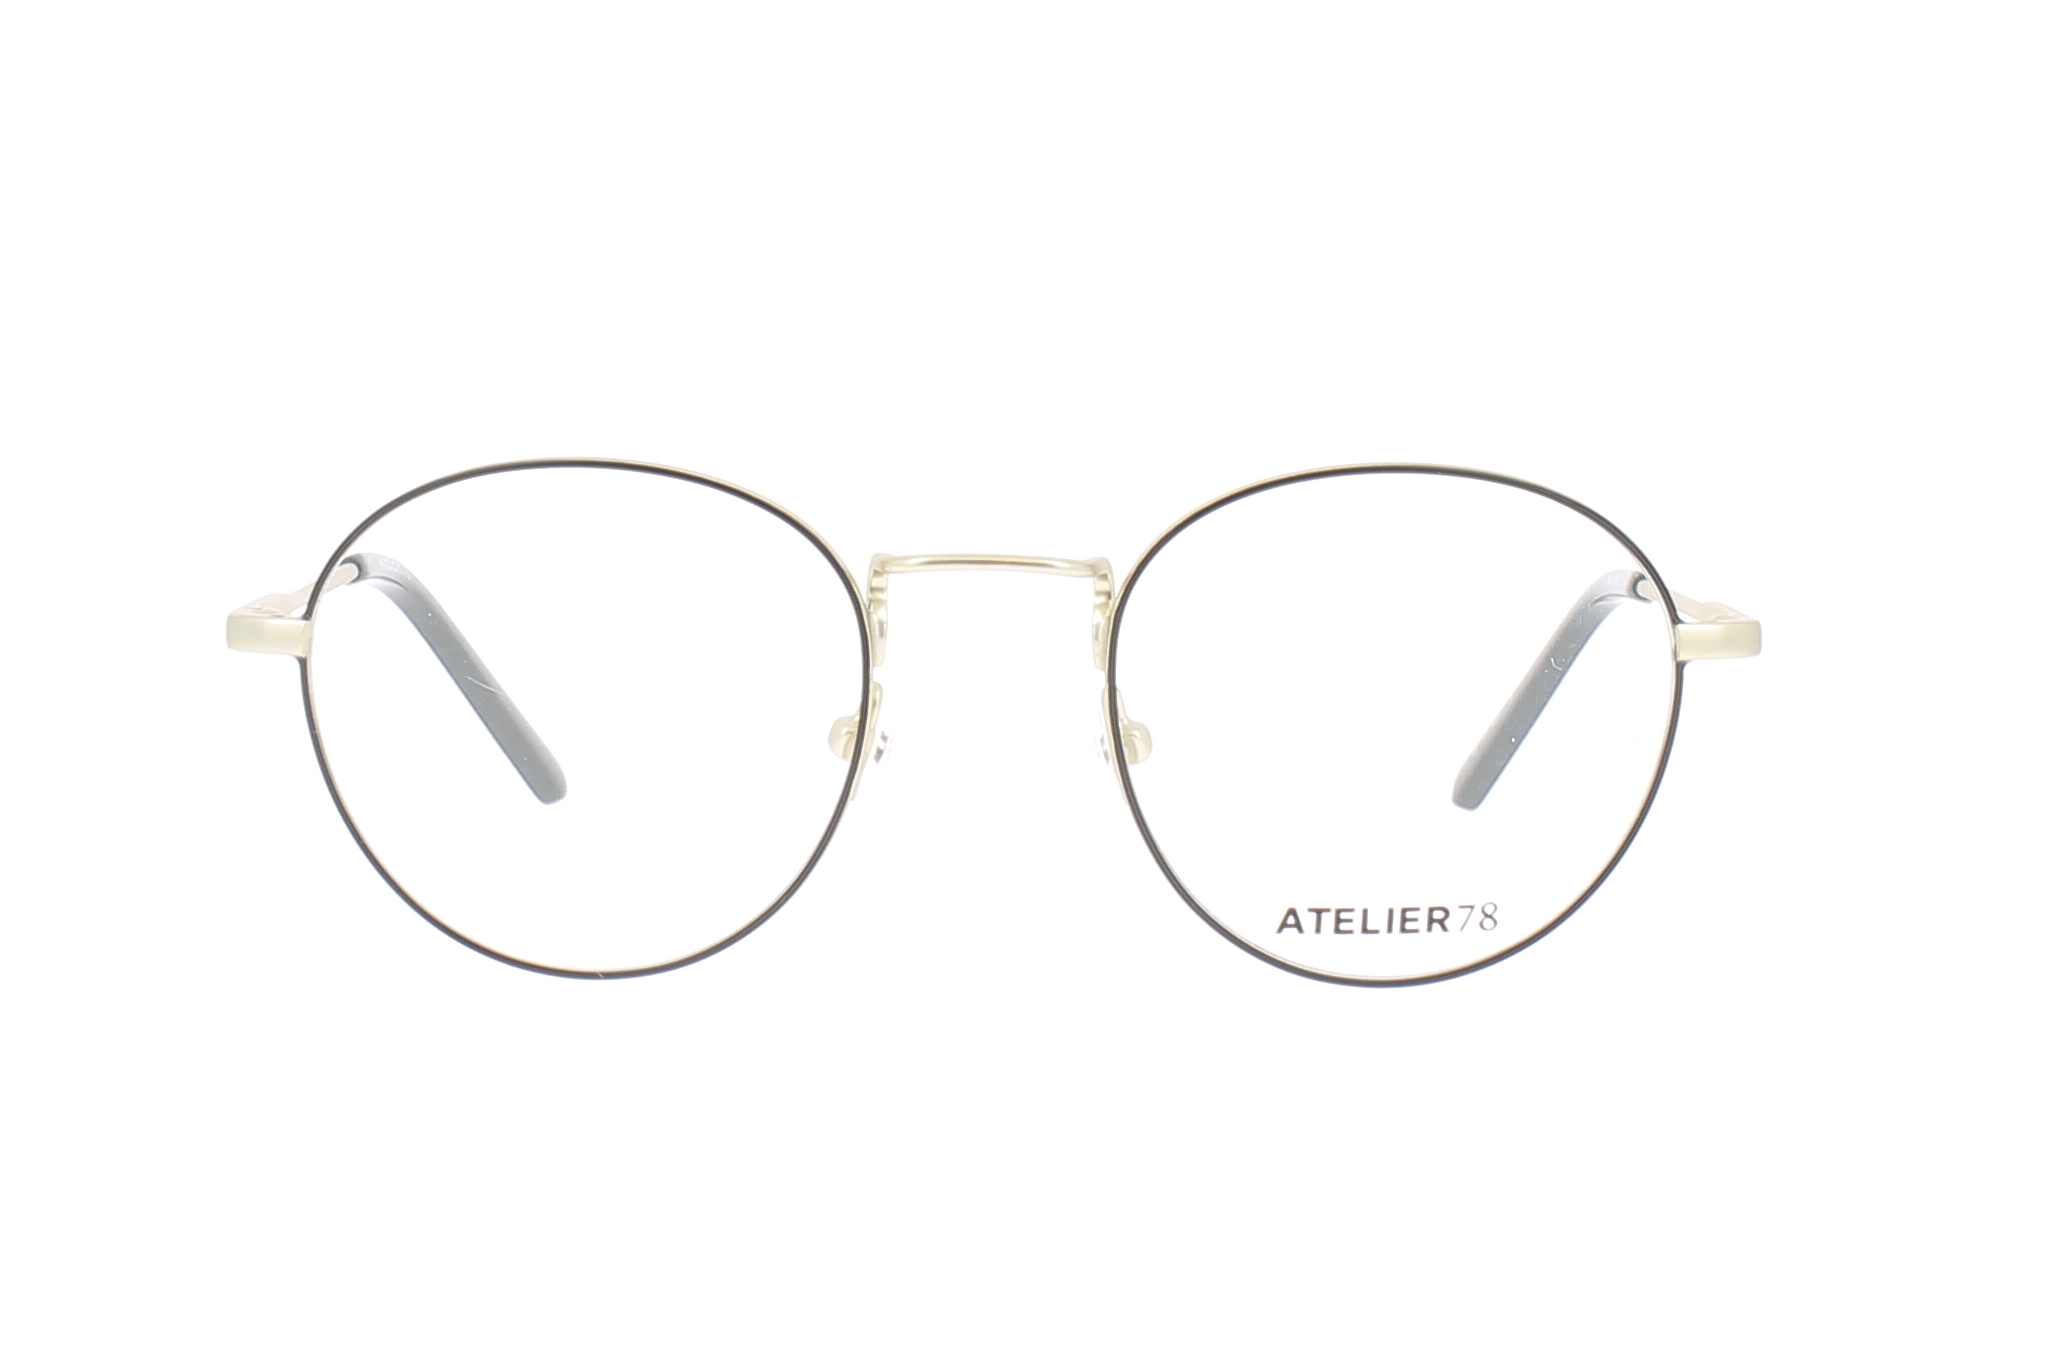 Glasses Atelier78 Rully, black colour - Doyle